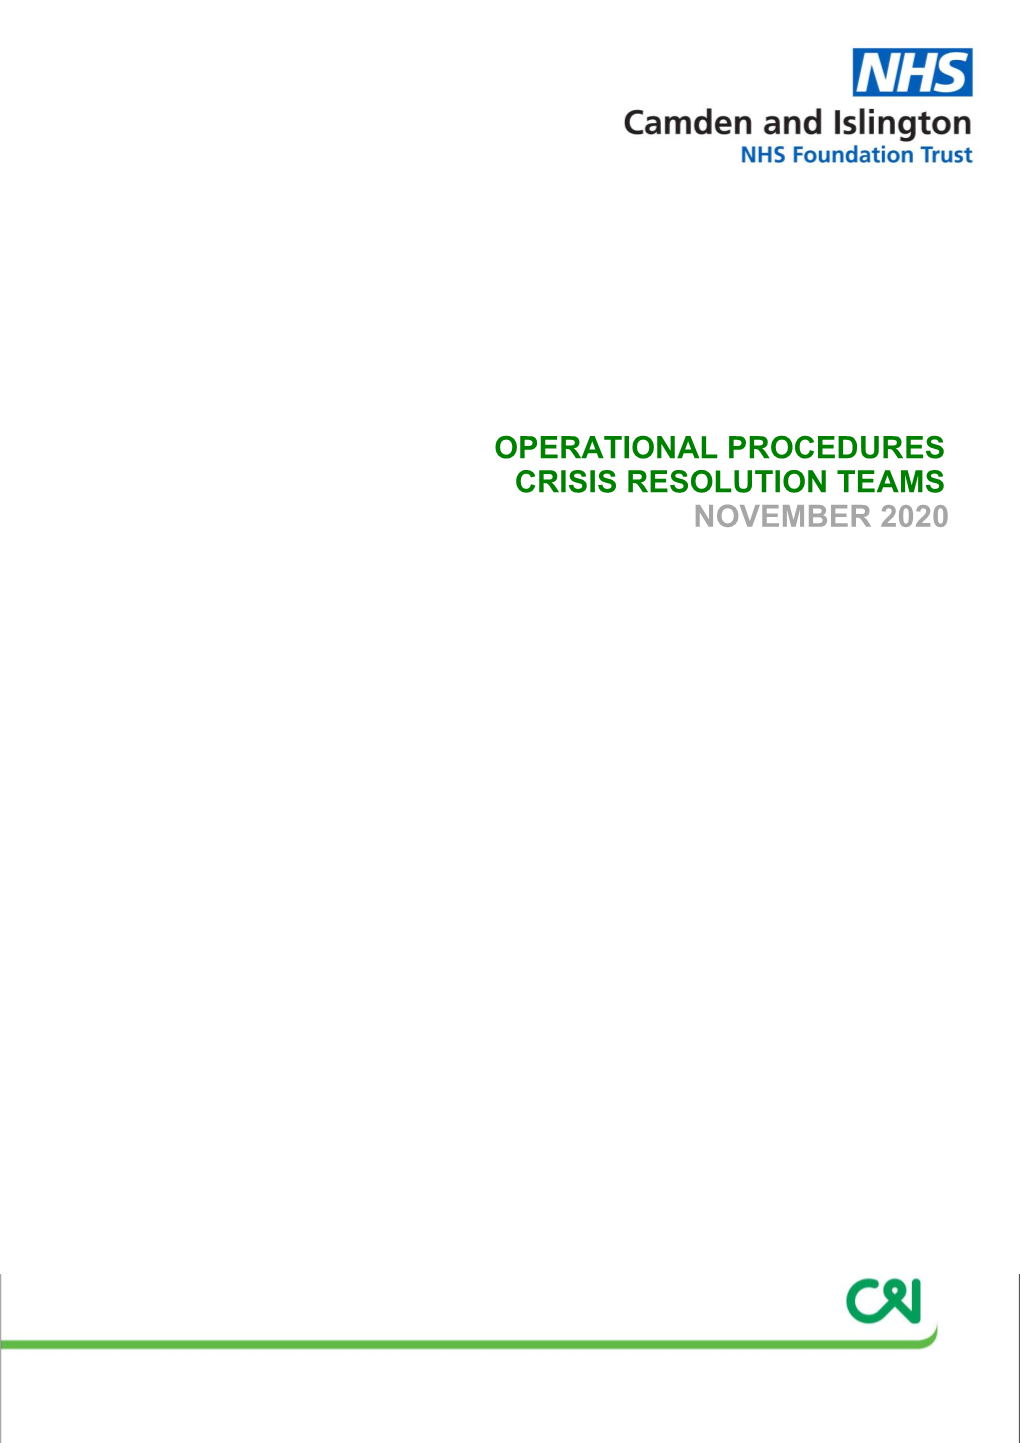 Operational Procedures Crisis Resolution Teams November 2020